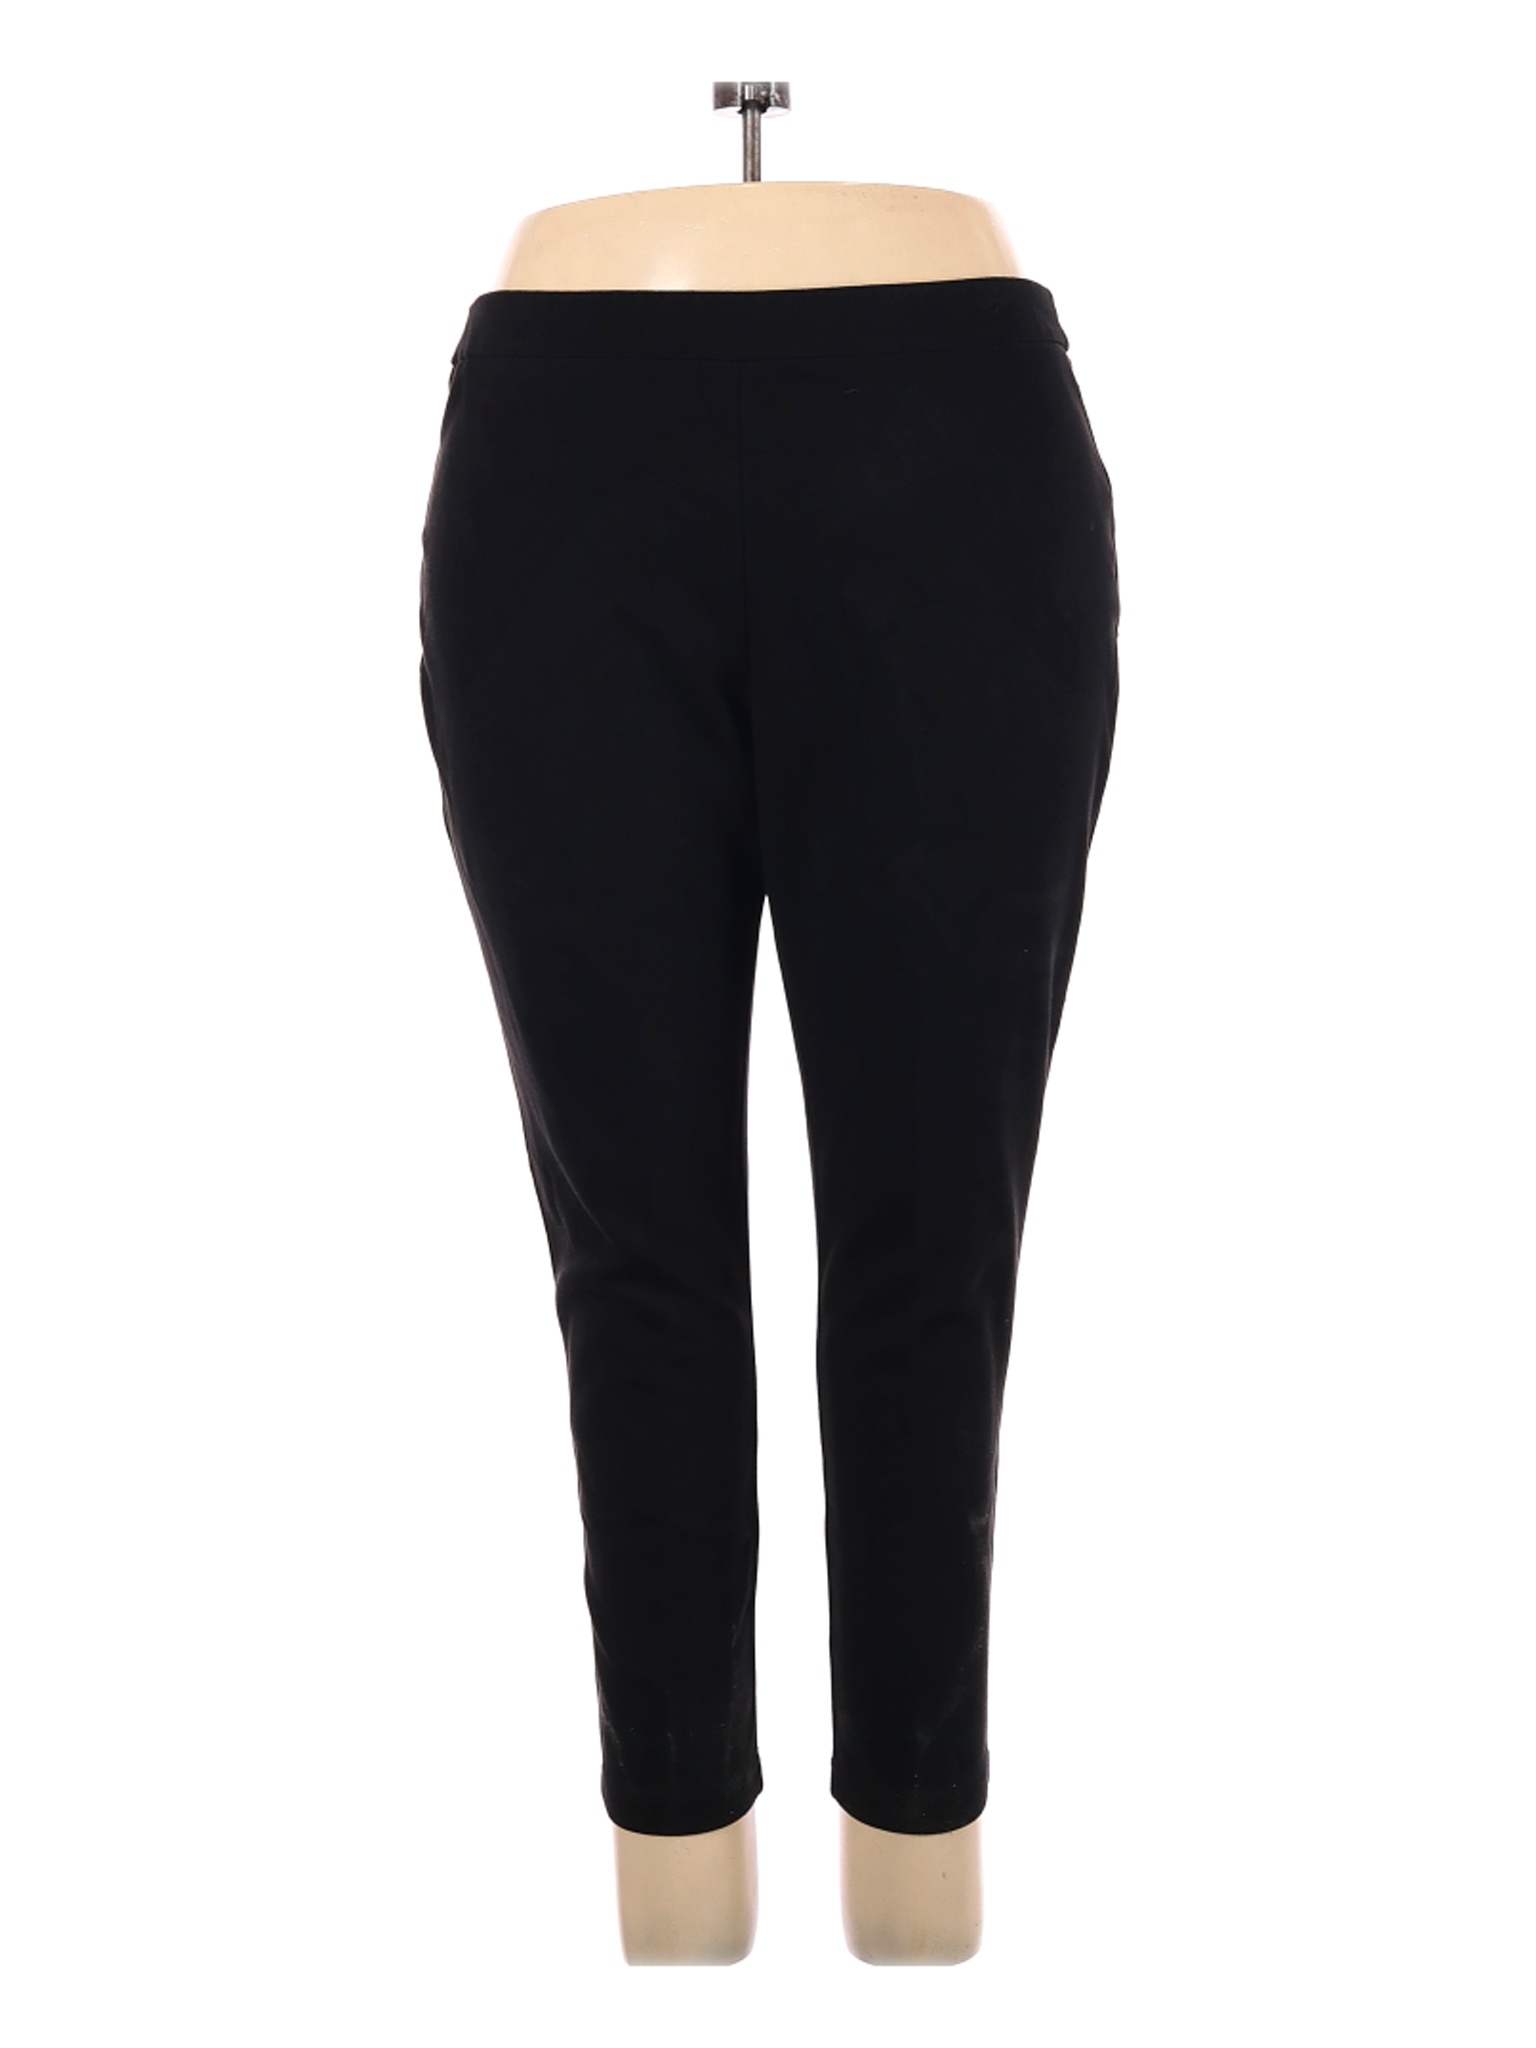 New Directions Women Black Casual Pants 3X Plus | eBay